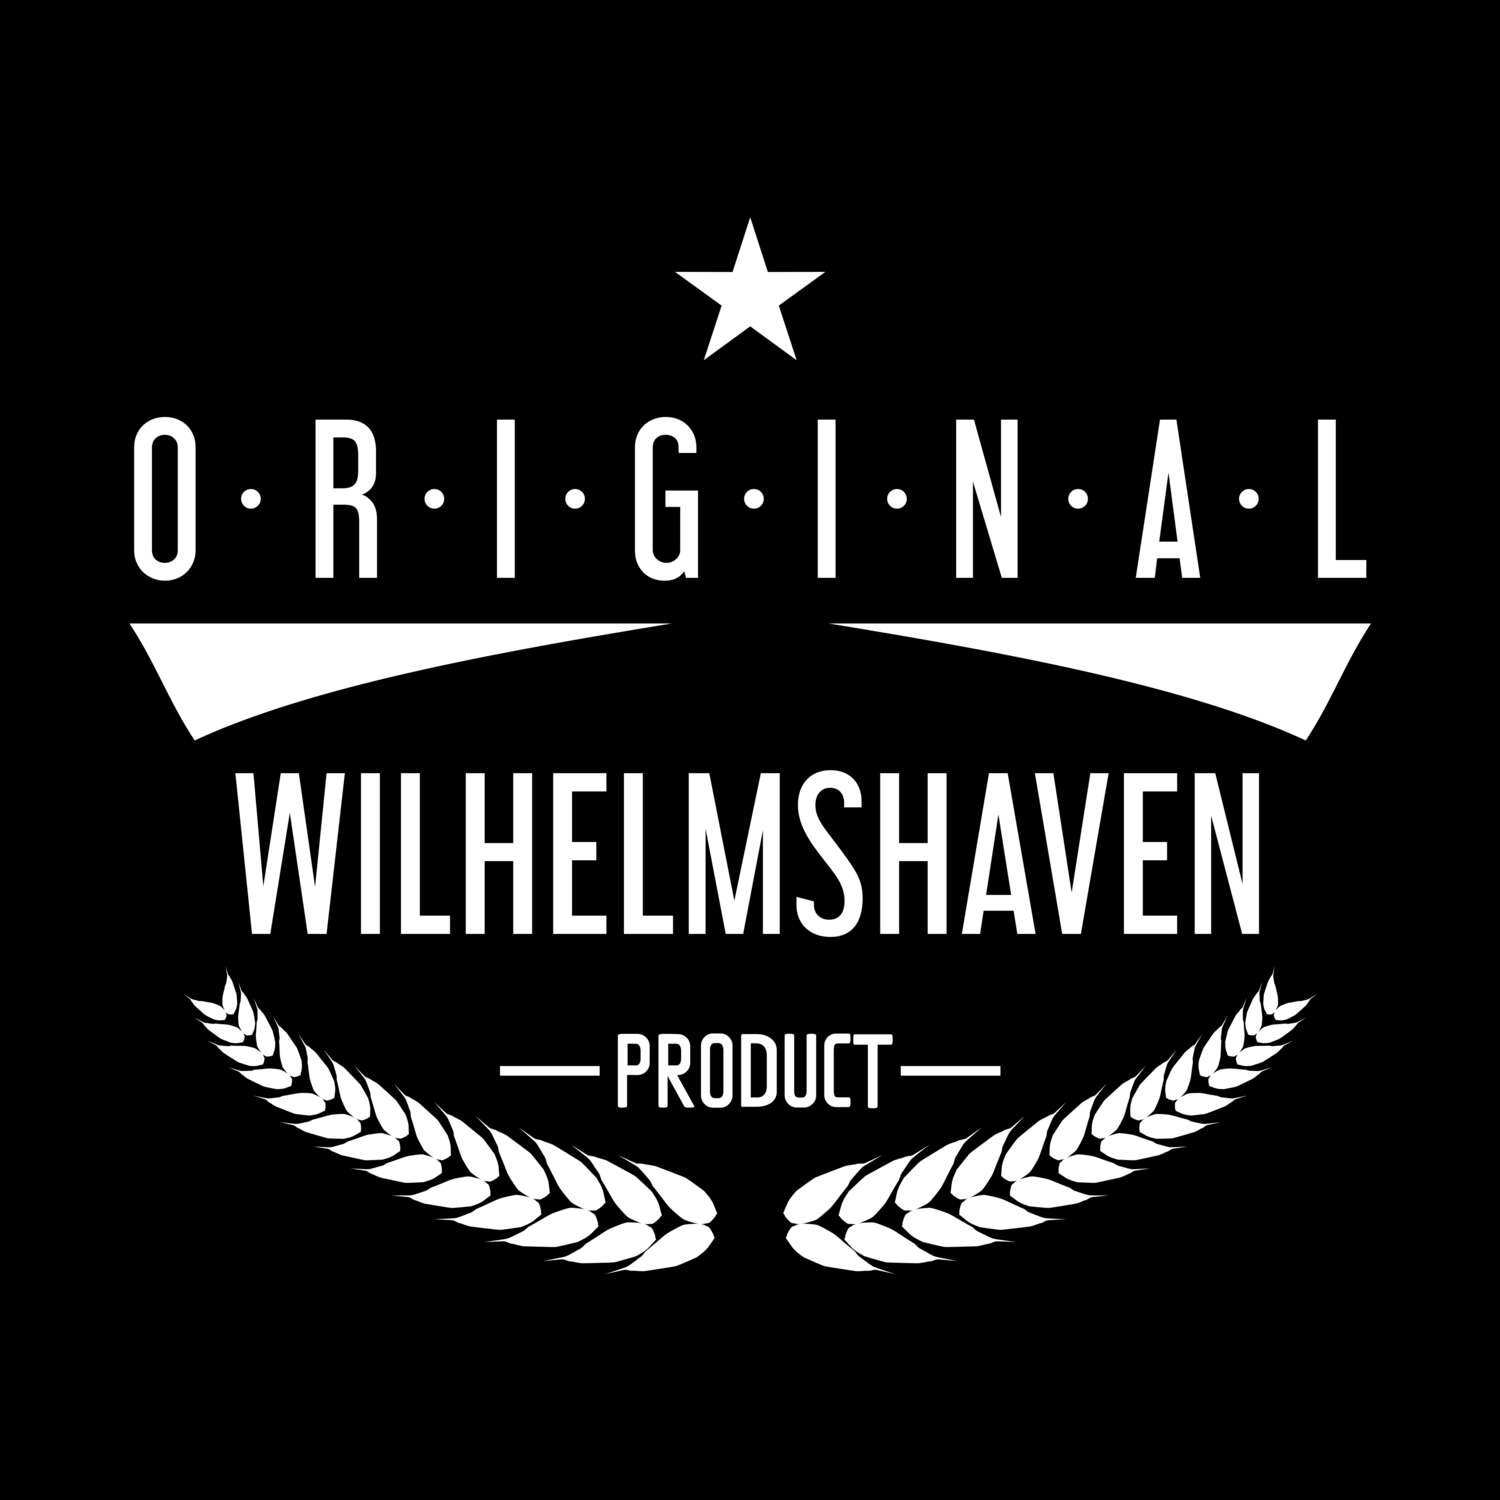 Wilhelmshaven T-Shirt »Original Product«